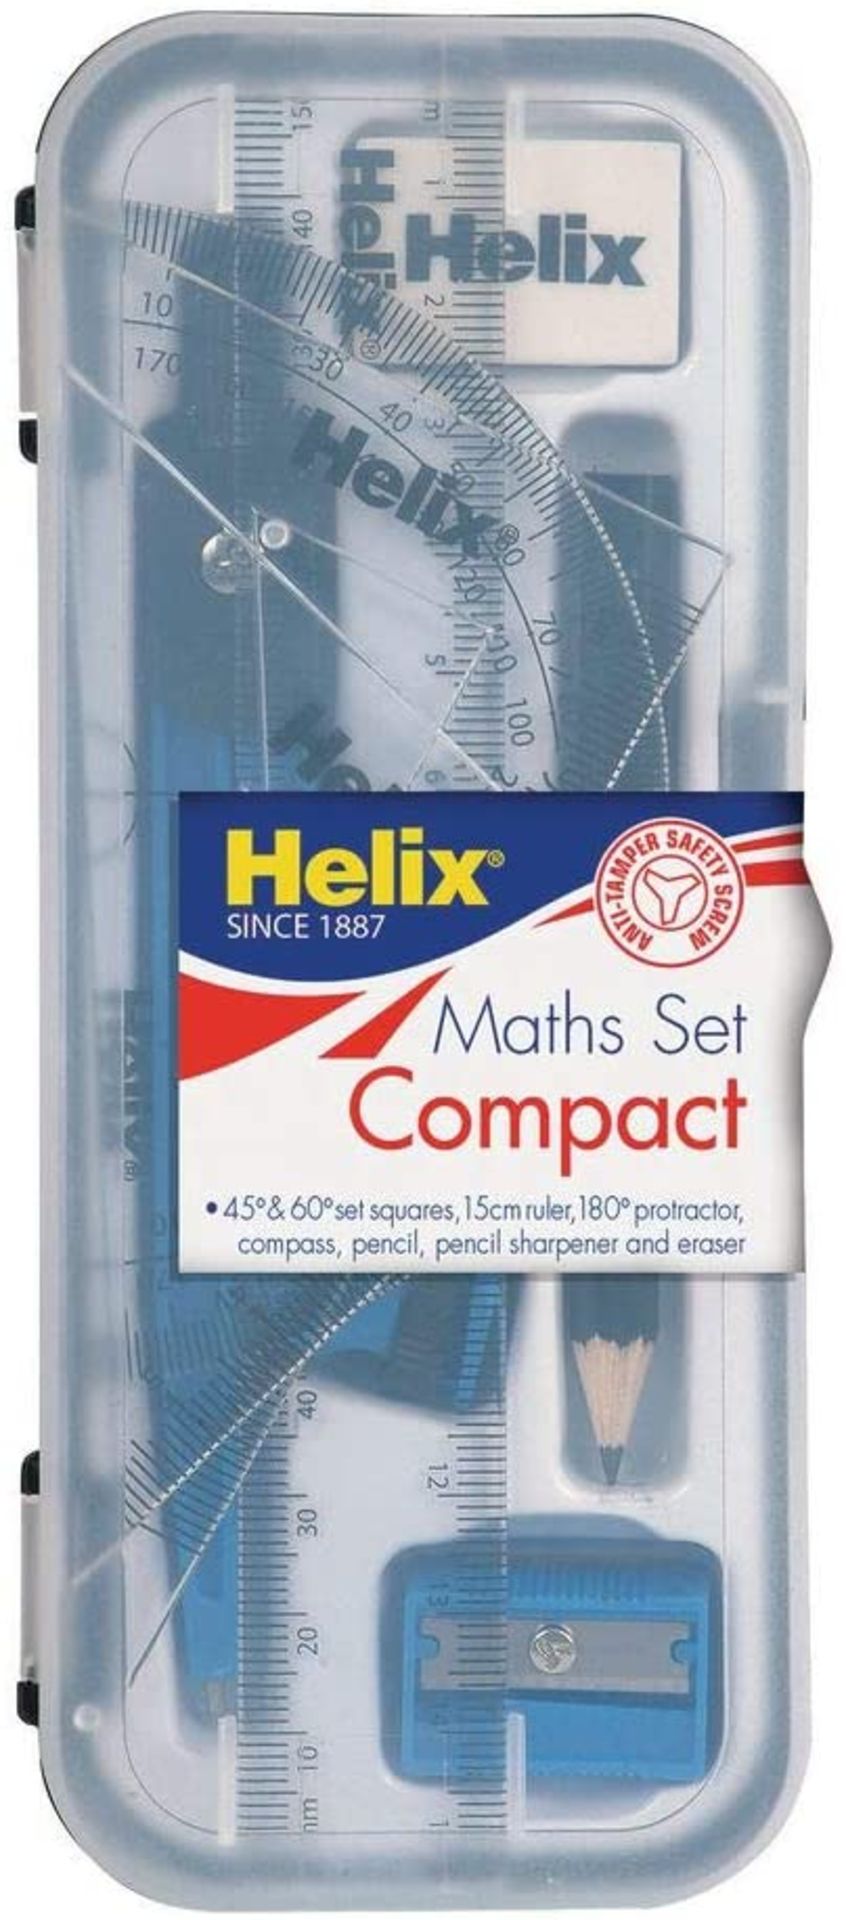 Box of 96 sets Helix Compact Maths Set RRP £2.99 each (£287.04)